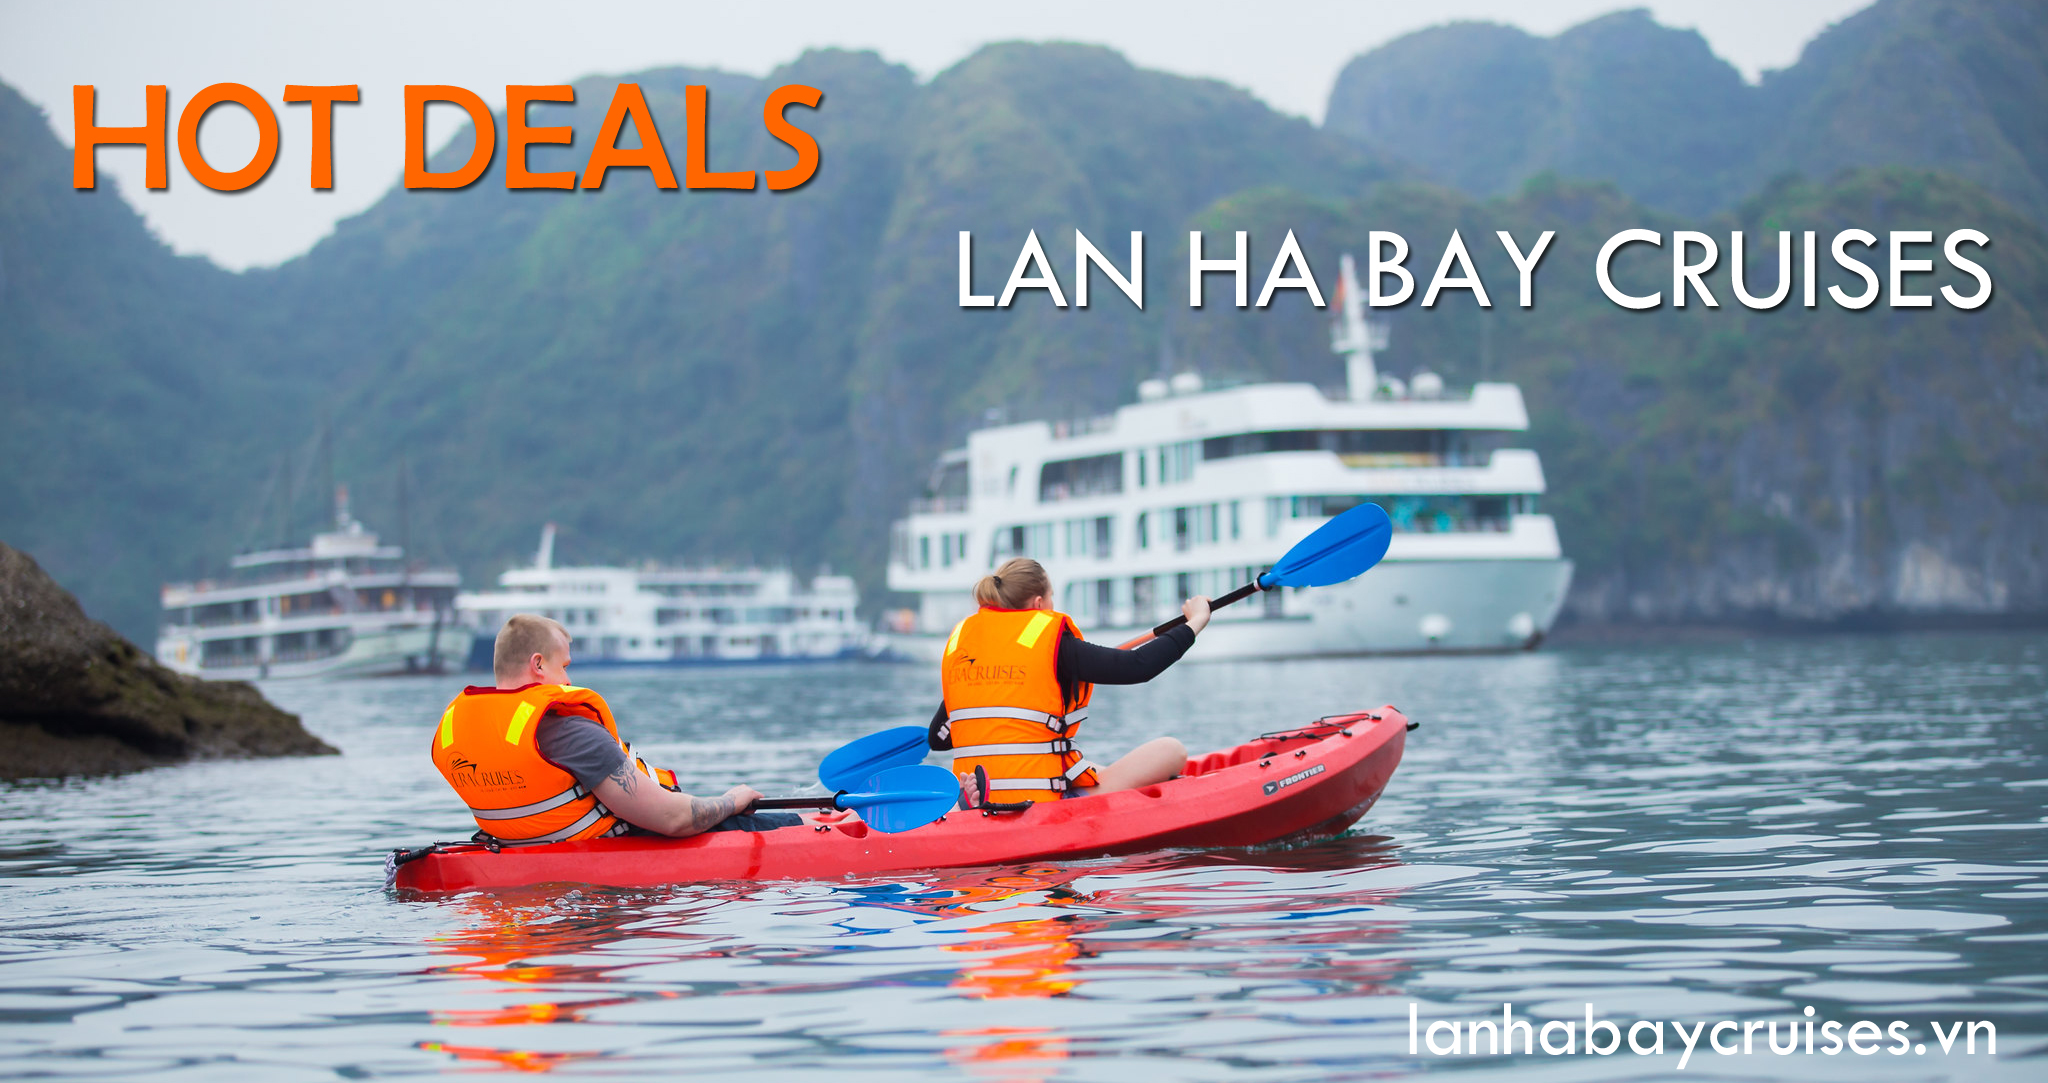 Lan Ha Bay Cruises Best Deals